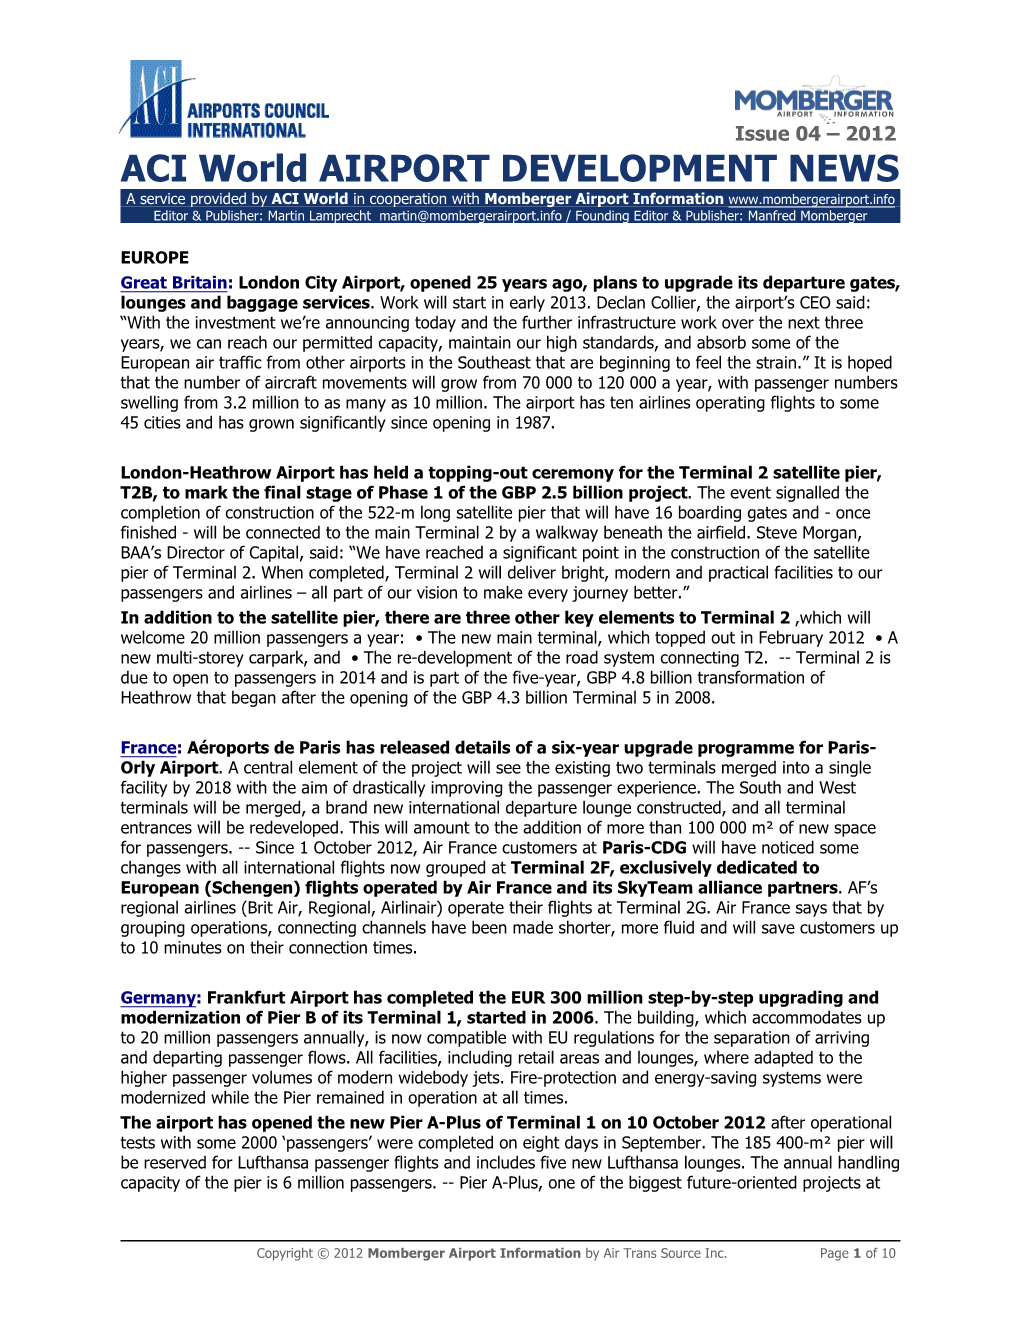 ACI World Airport Development News: Issue 04 – 2012